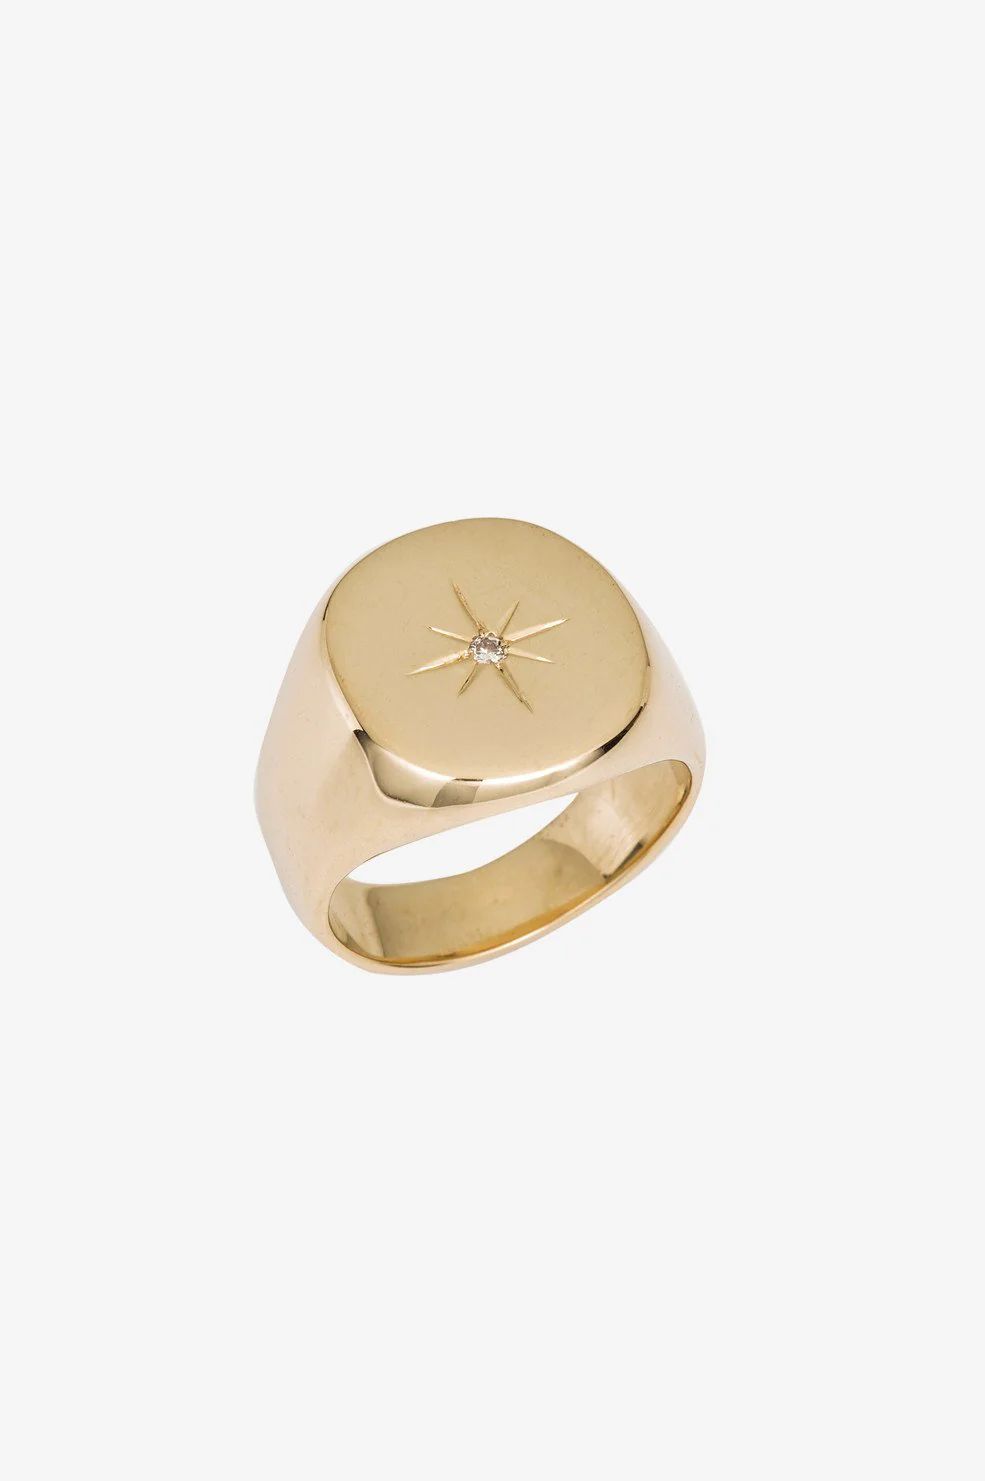 GOLD RING WITH DIAMOND STAR | ANINE BING